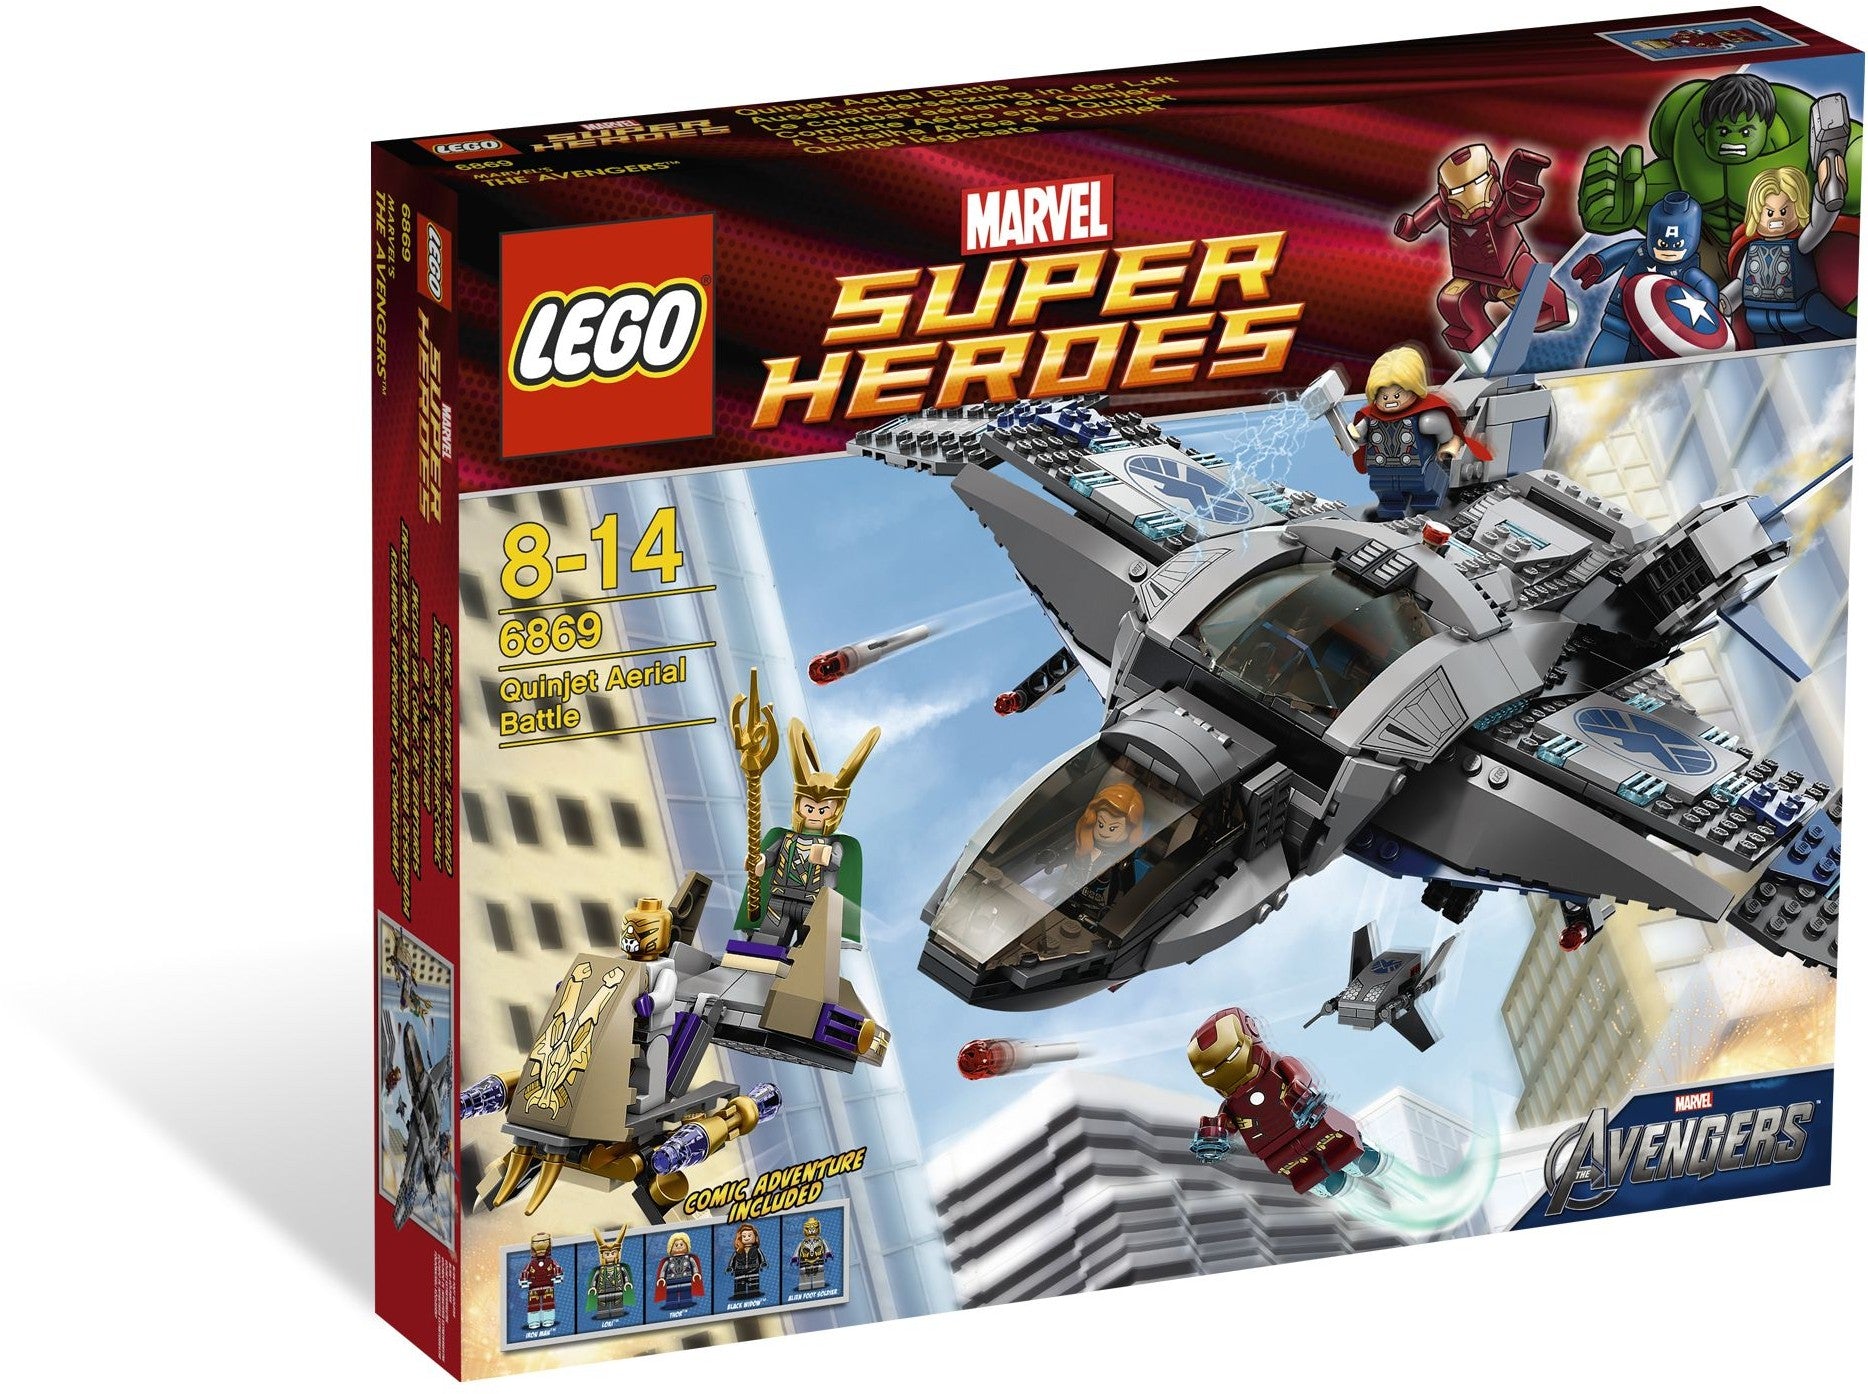 Lego Super Heroes 6869 - Quinjet Aerial Battle